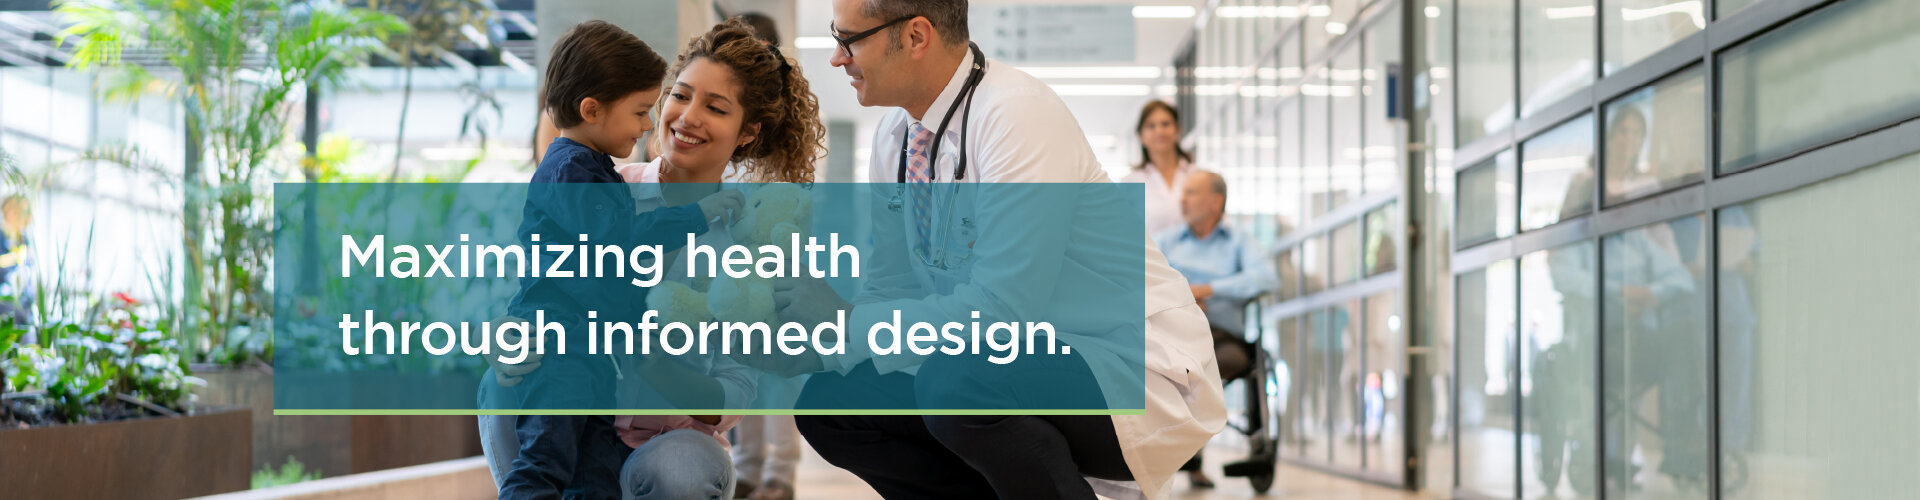 Maximizing health through informed design.